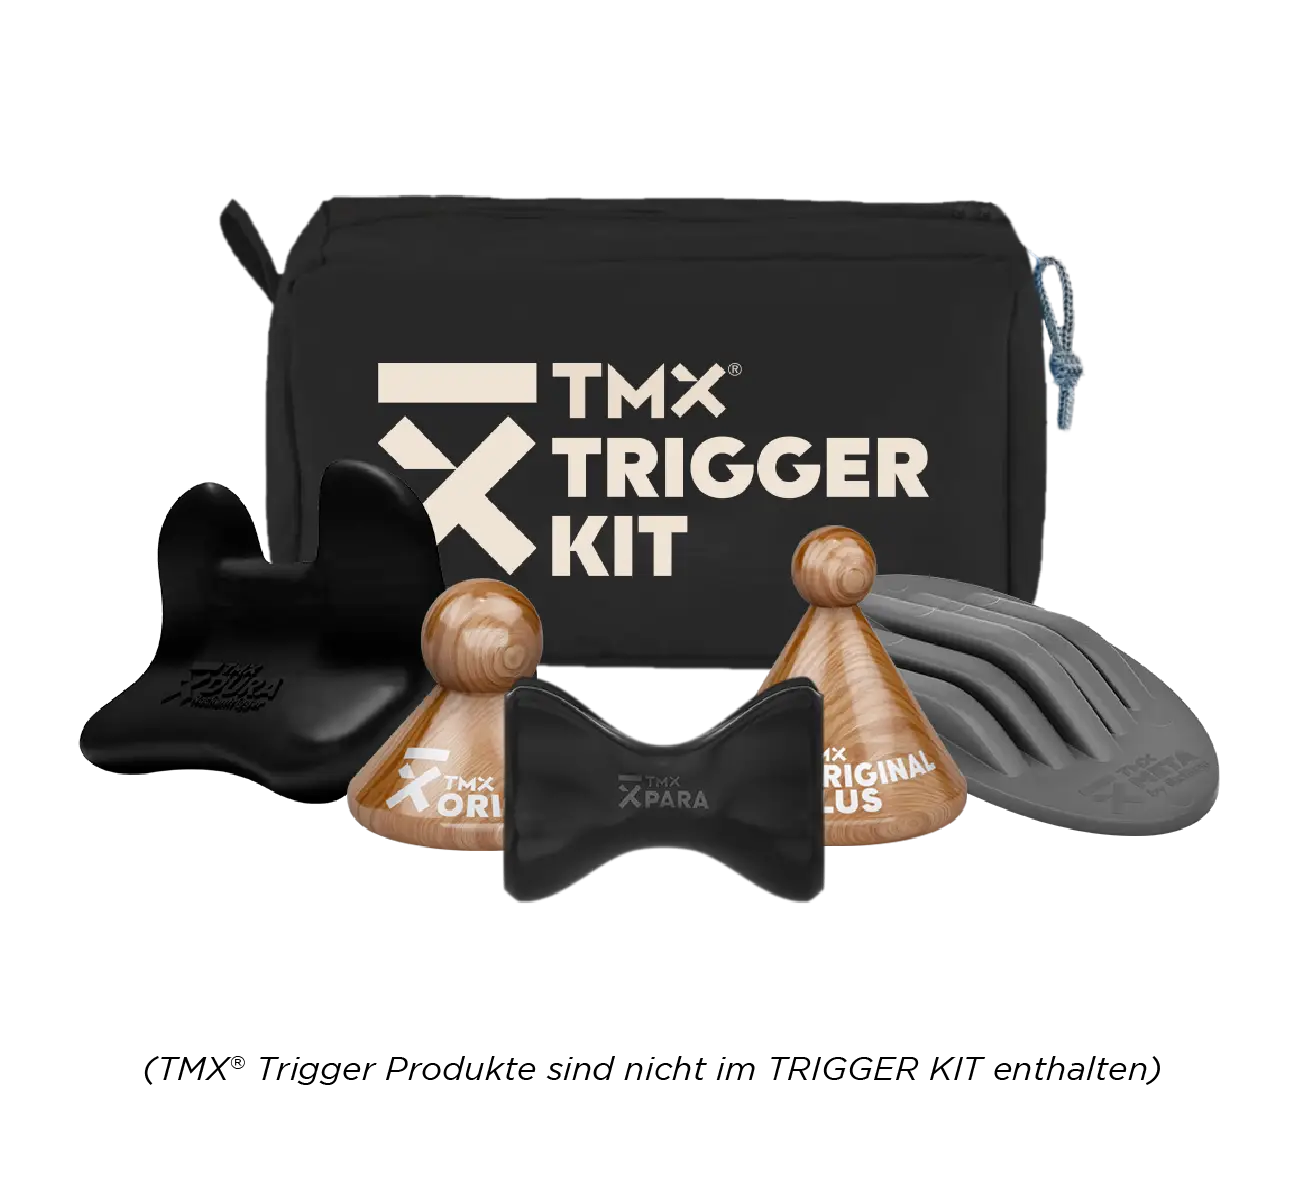 TMX TRIGGER KIT - mit TMX Produkten